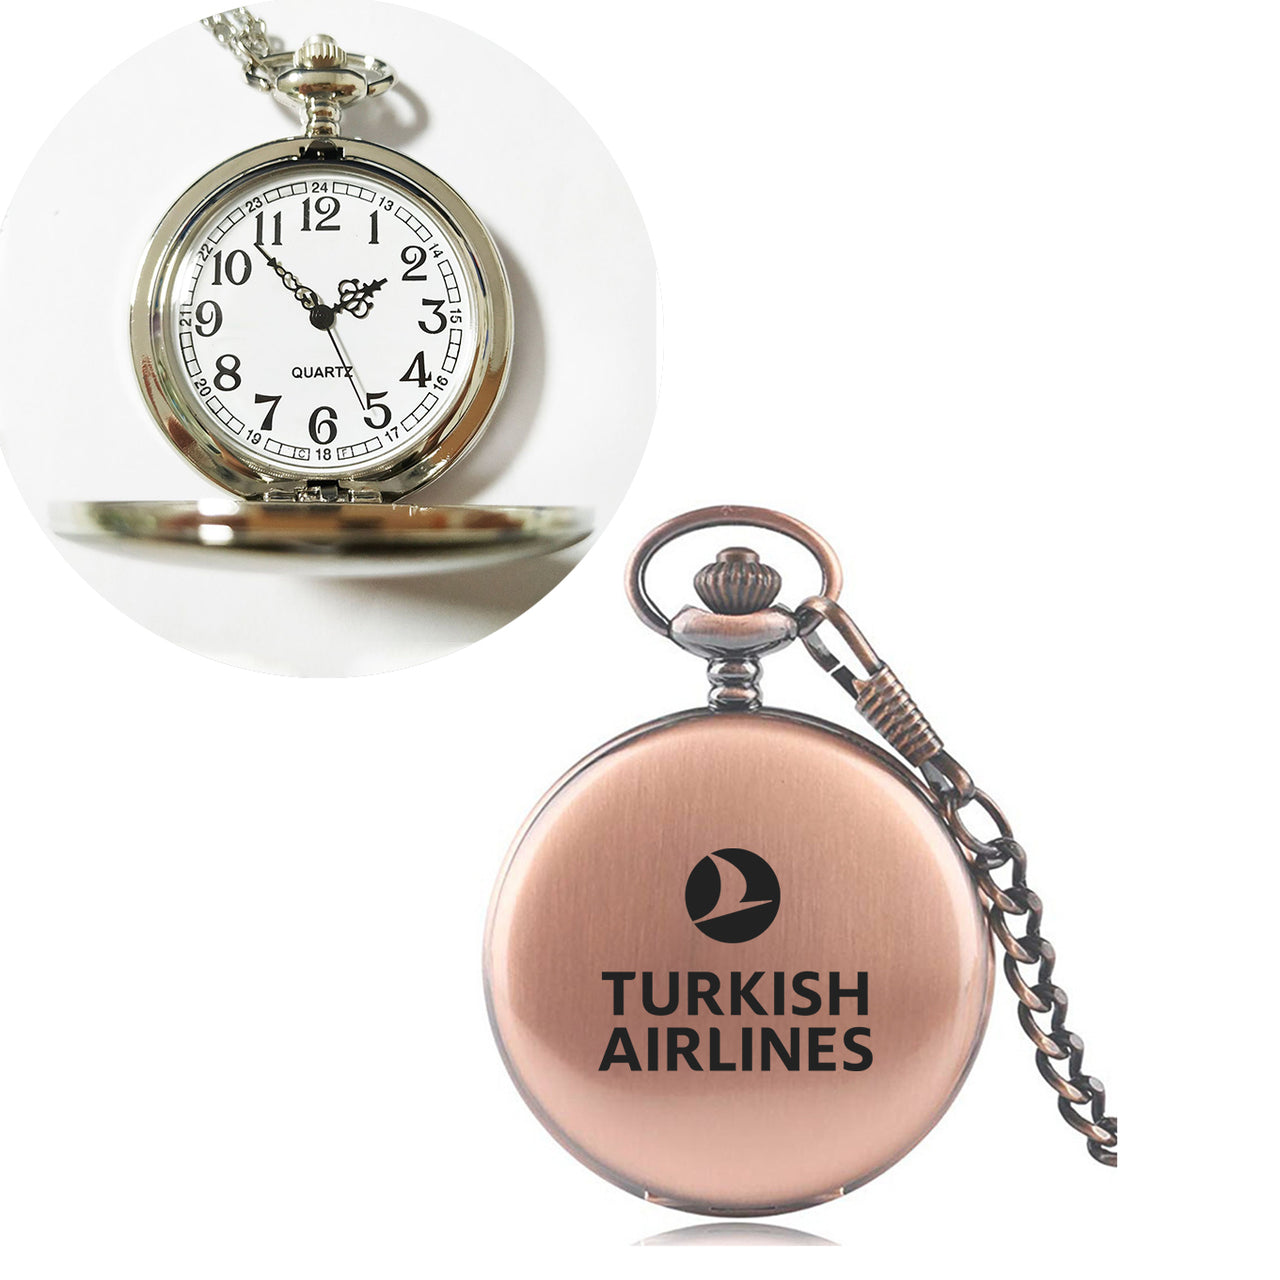 Turkish Airlines Designed Pocket Watches